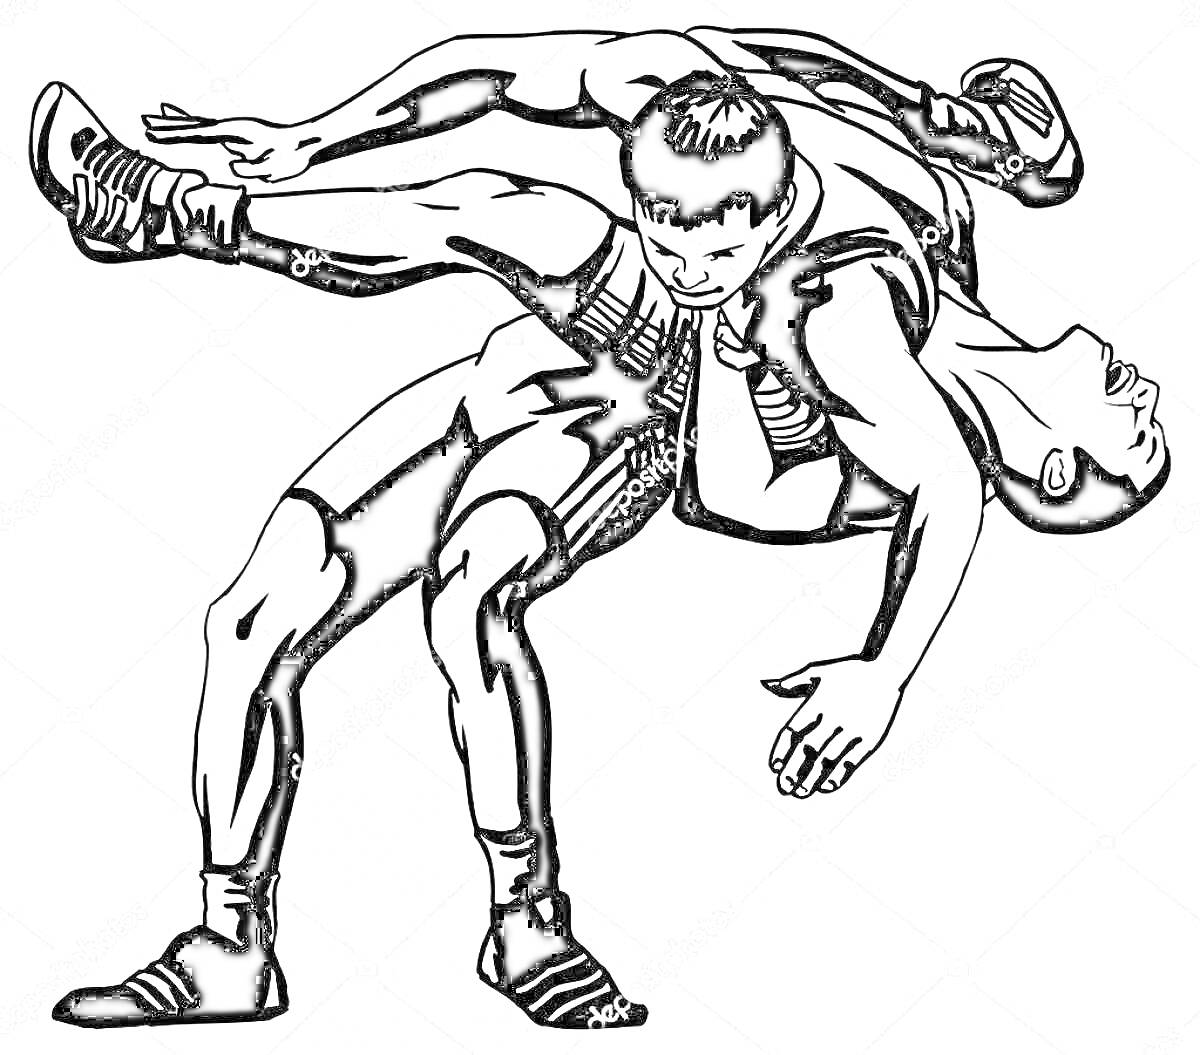 На раскраске изображено: Спорт, Борьба, Спортивная одежда, Схватка